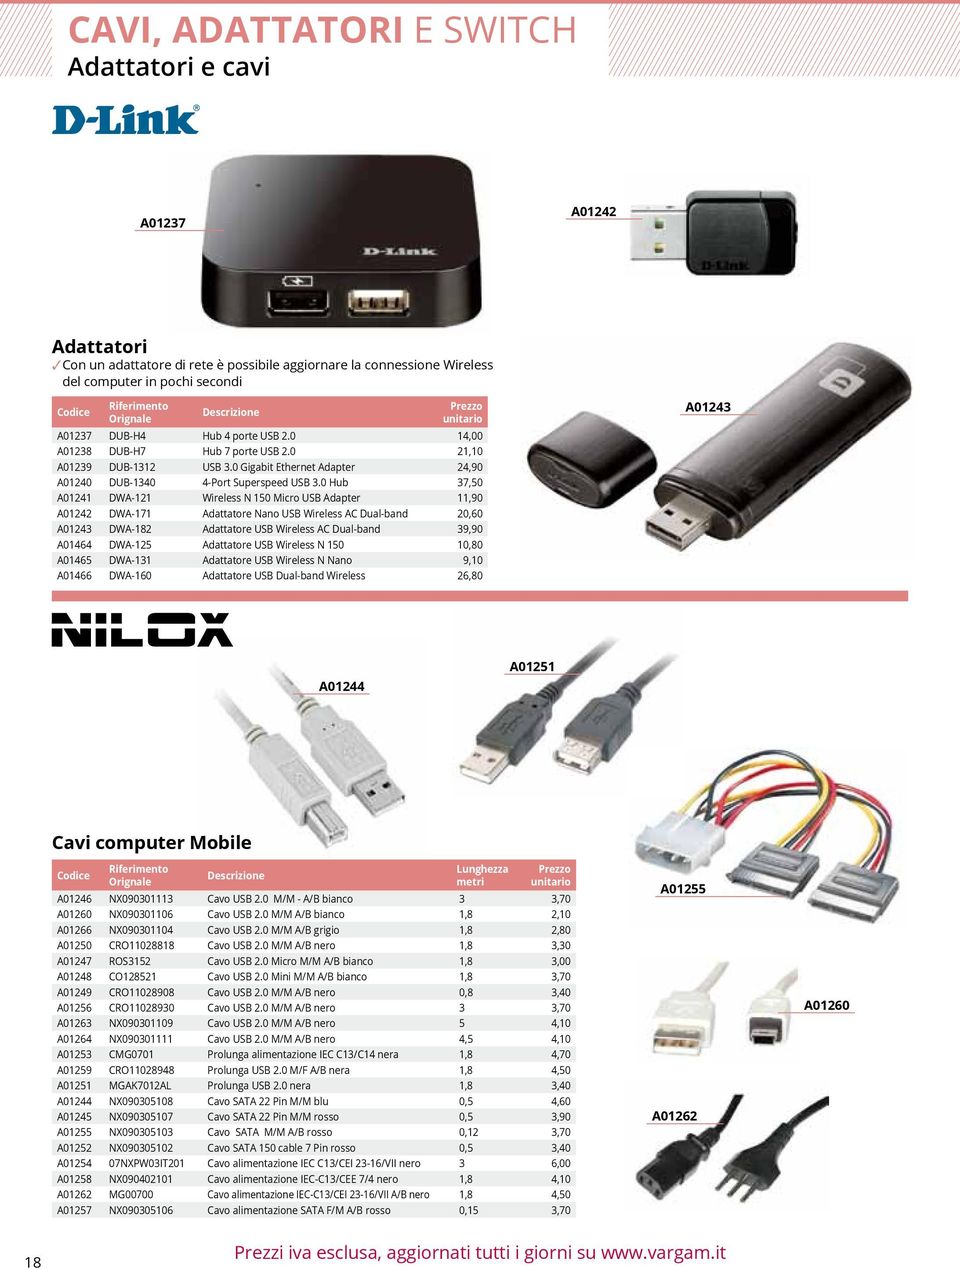 0 Hub 37,50 A01241 DWA-121 Wireless N 150 Micro USB Adapter 11,90 A01242 DWA-171 Adattatore Nano USB Wireless AC Dual-band 20,60 A01243 DWA-182 Adattatore USB Wireless AC Dual-band 39,90 A01464